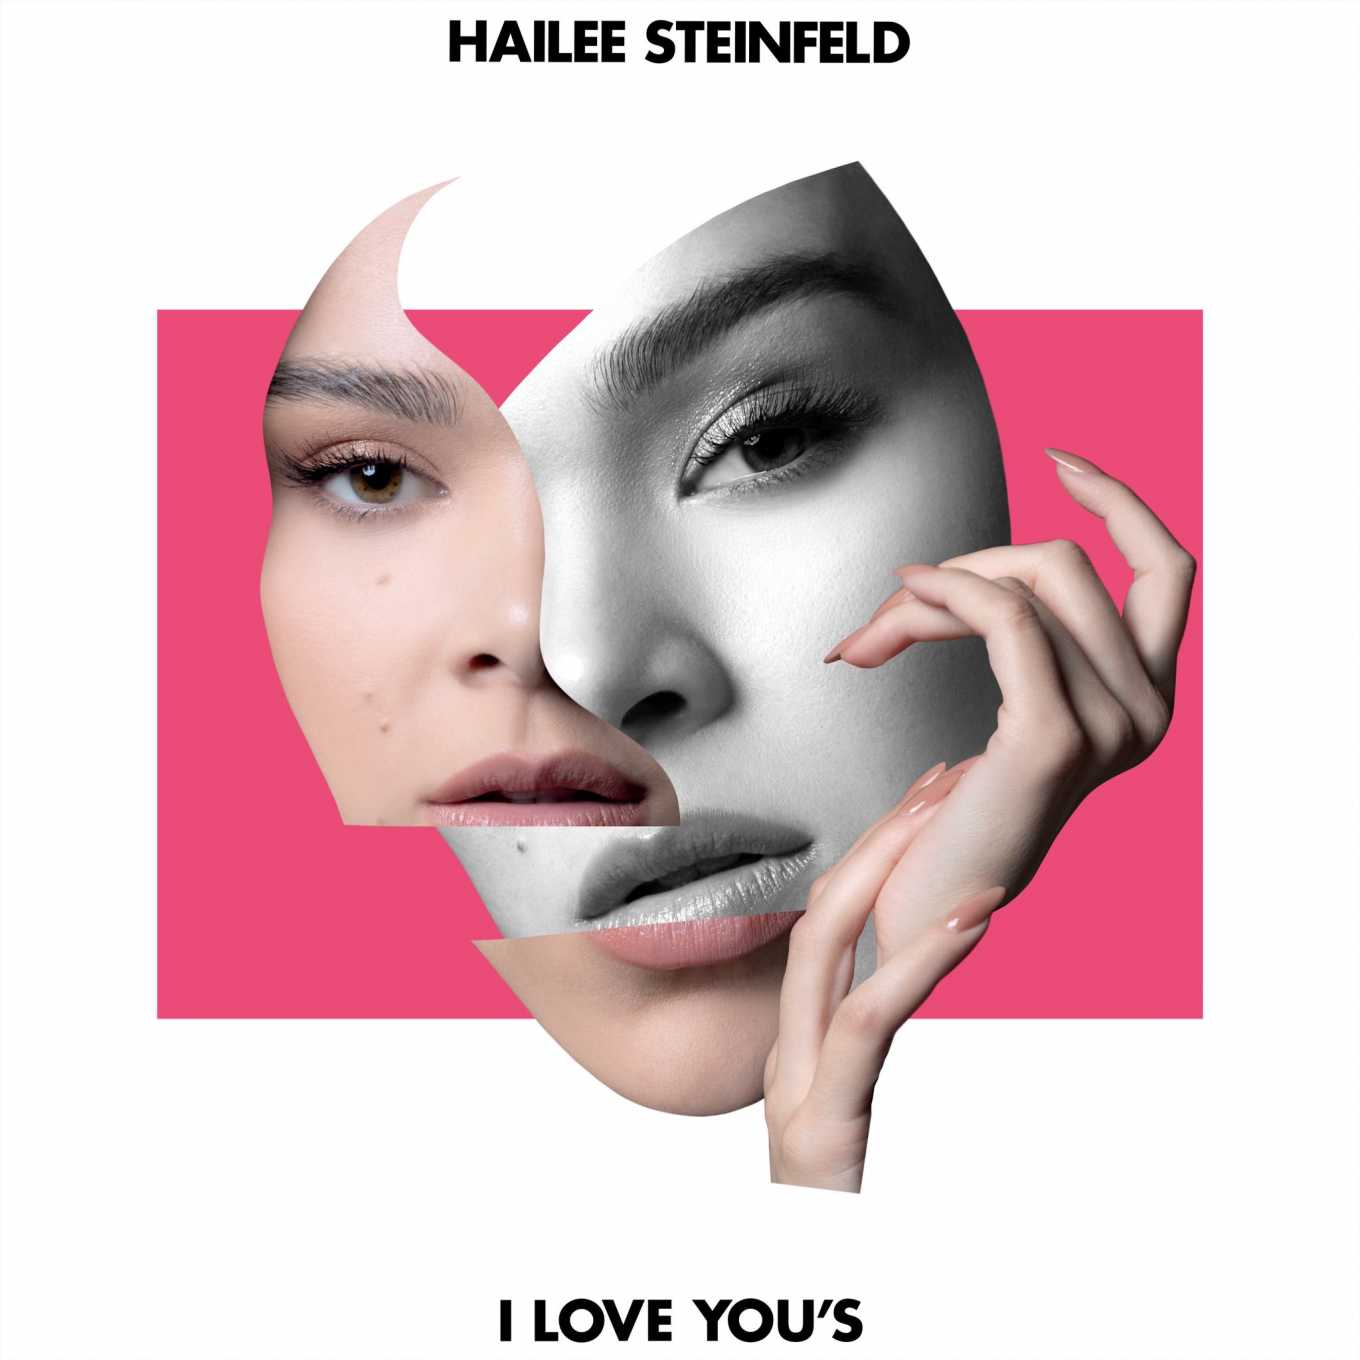 Hailee Steinfeld â€“ Personal pics